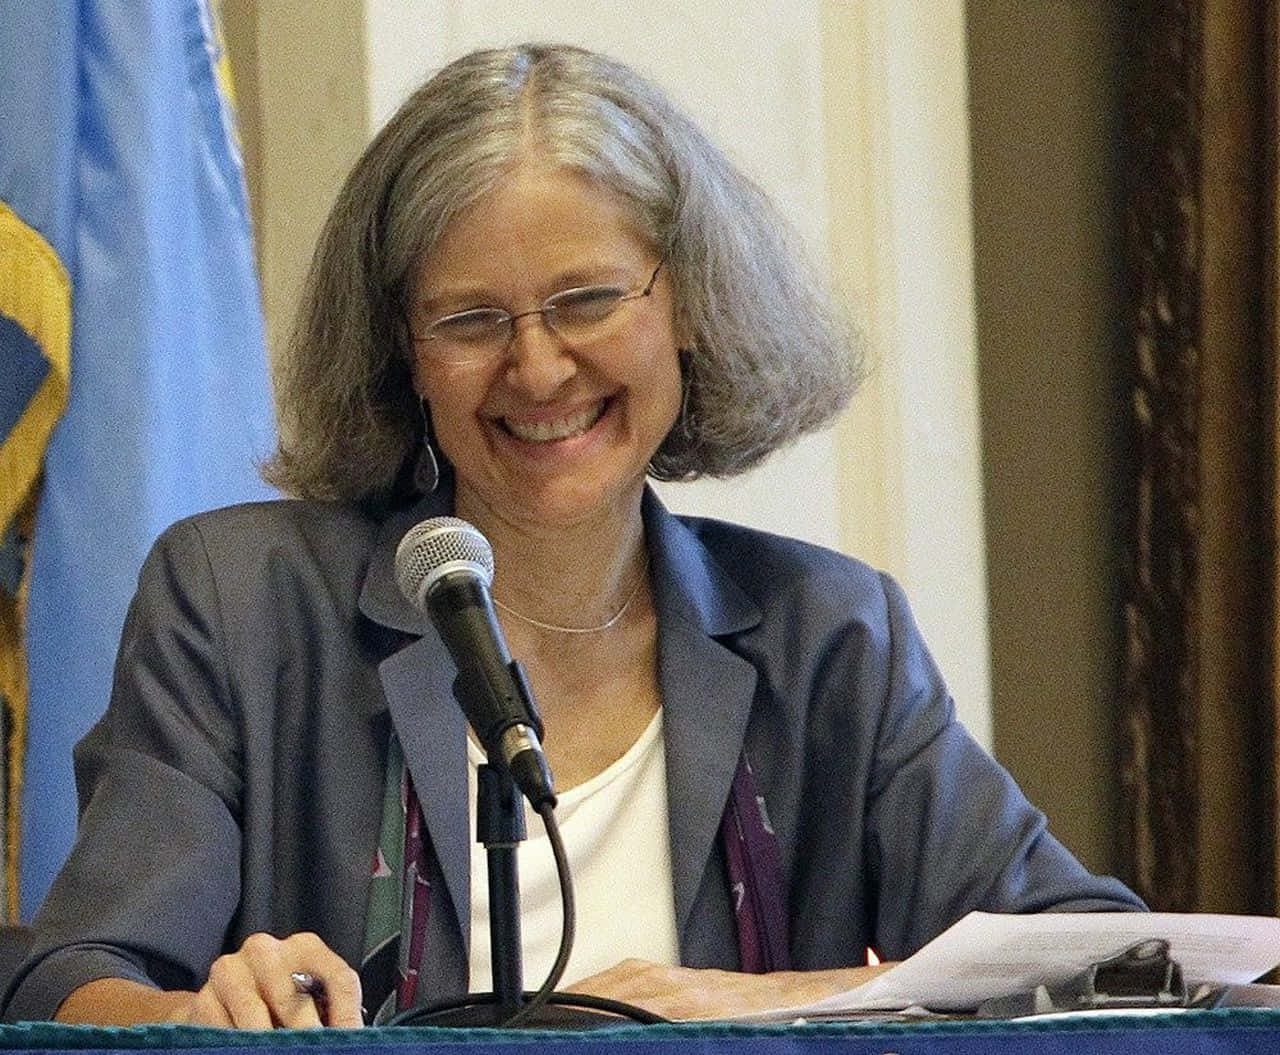 Genuine Smile Of Jill Stein Wallpaper